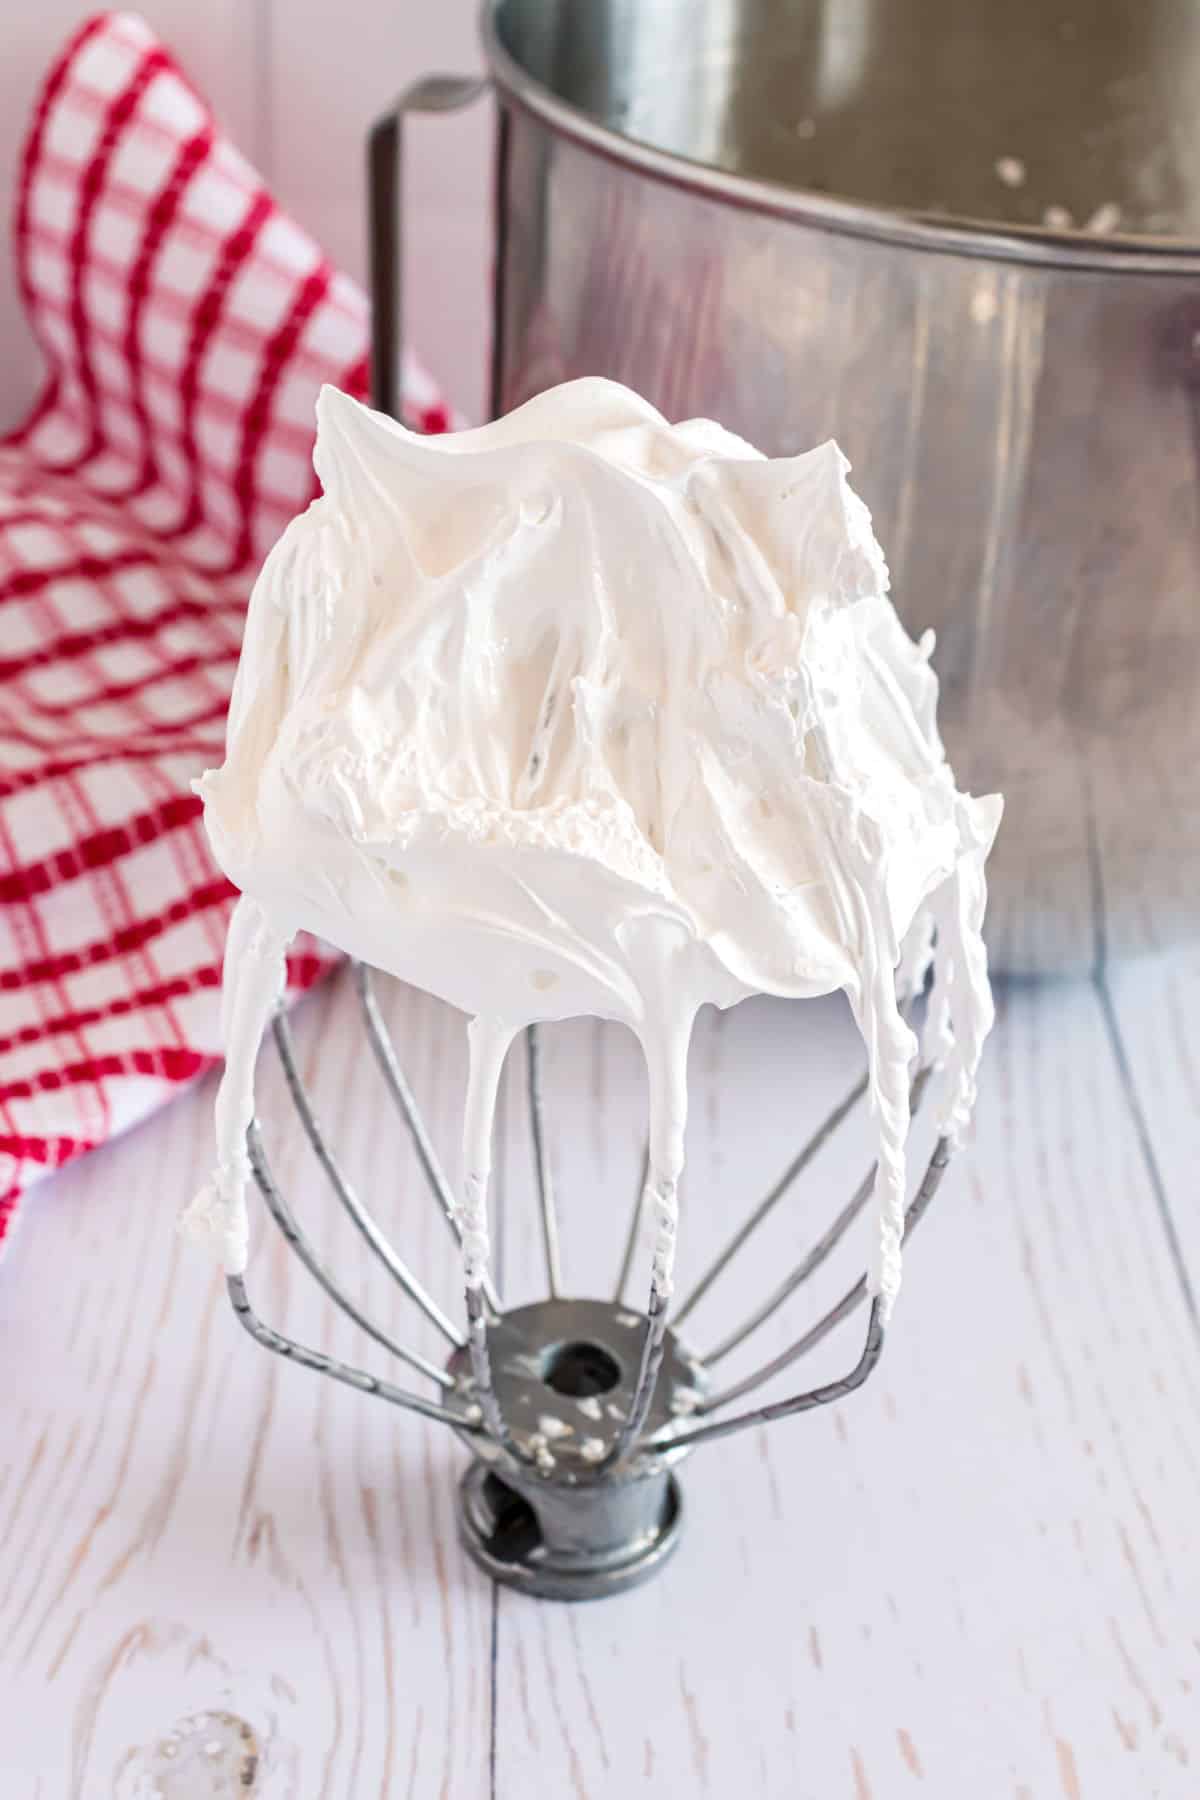 Homemade Marshmallow Fluff Recipe - Shugary Sweets